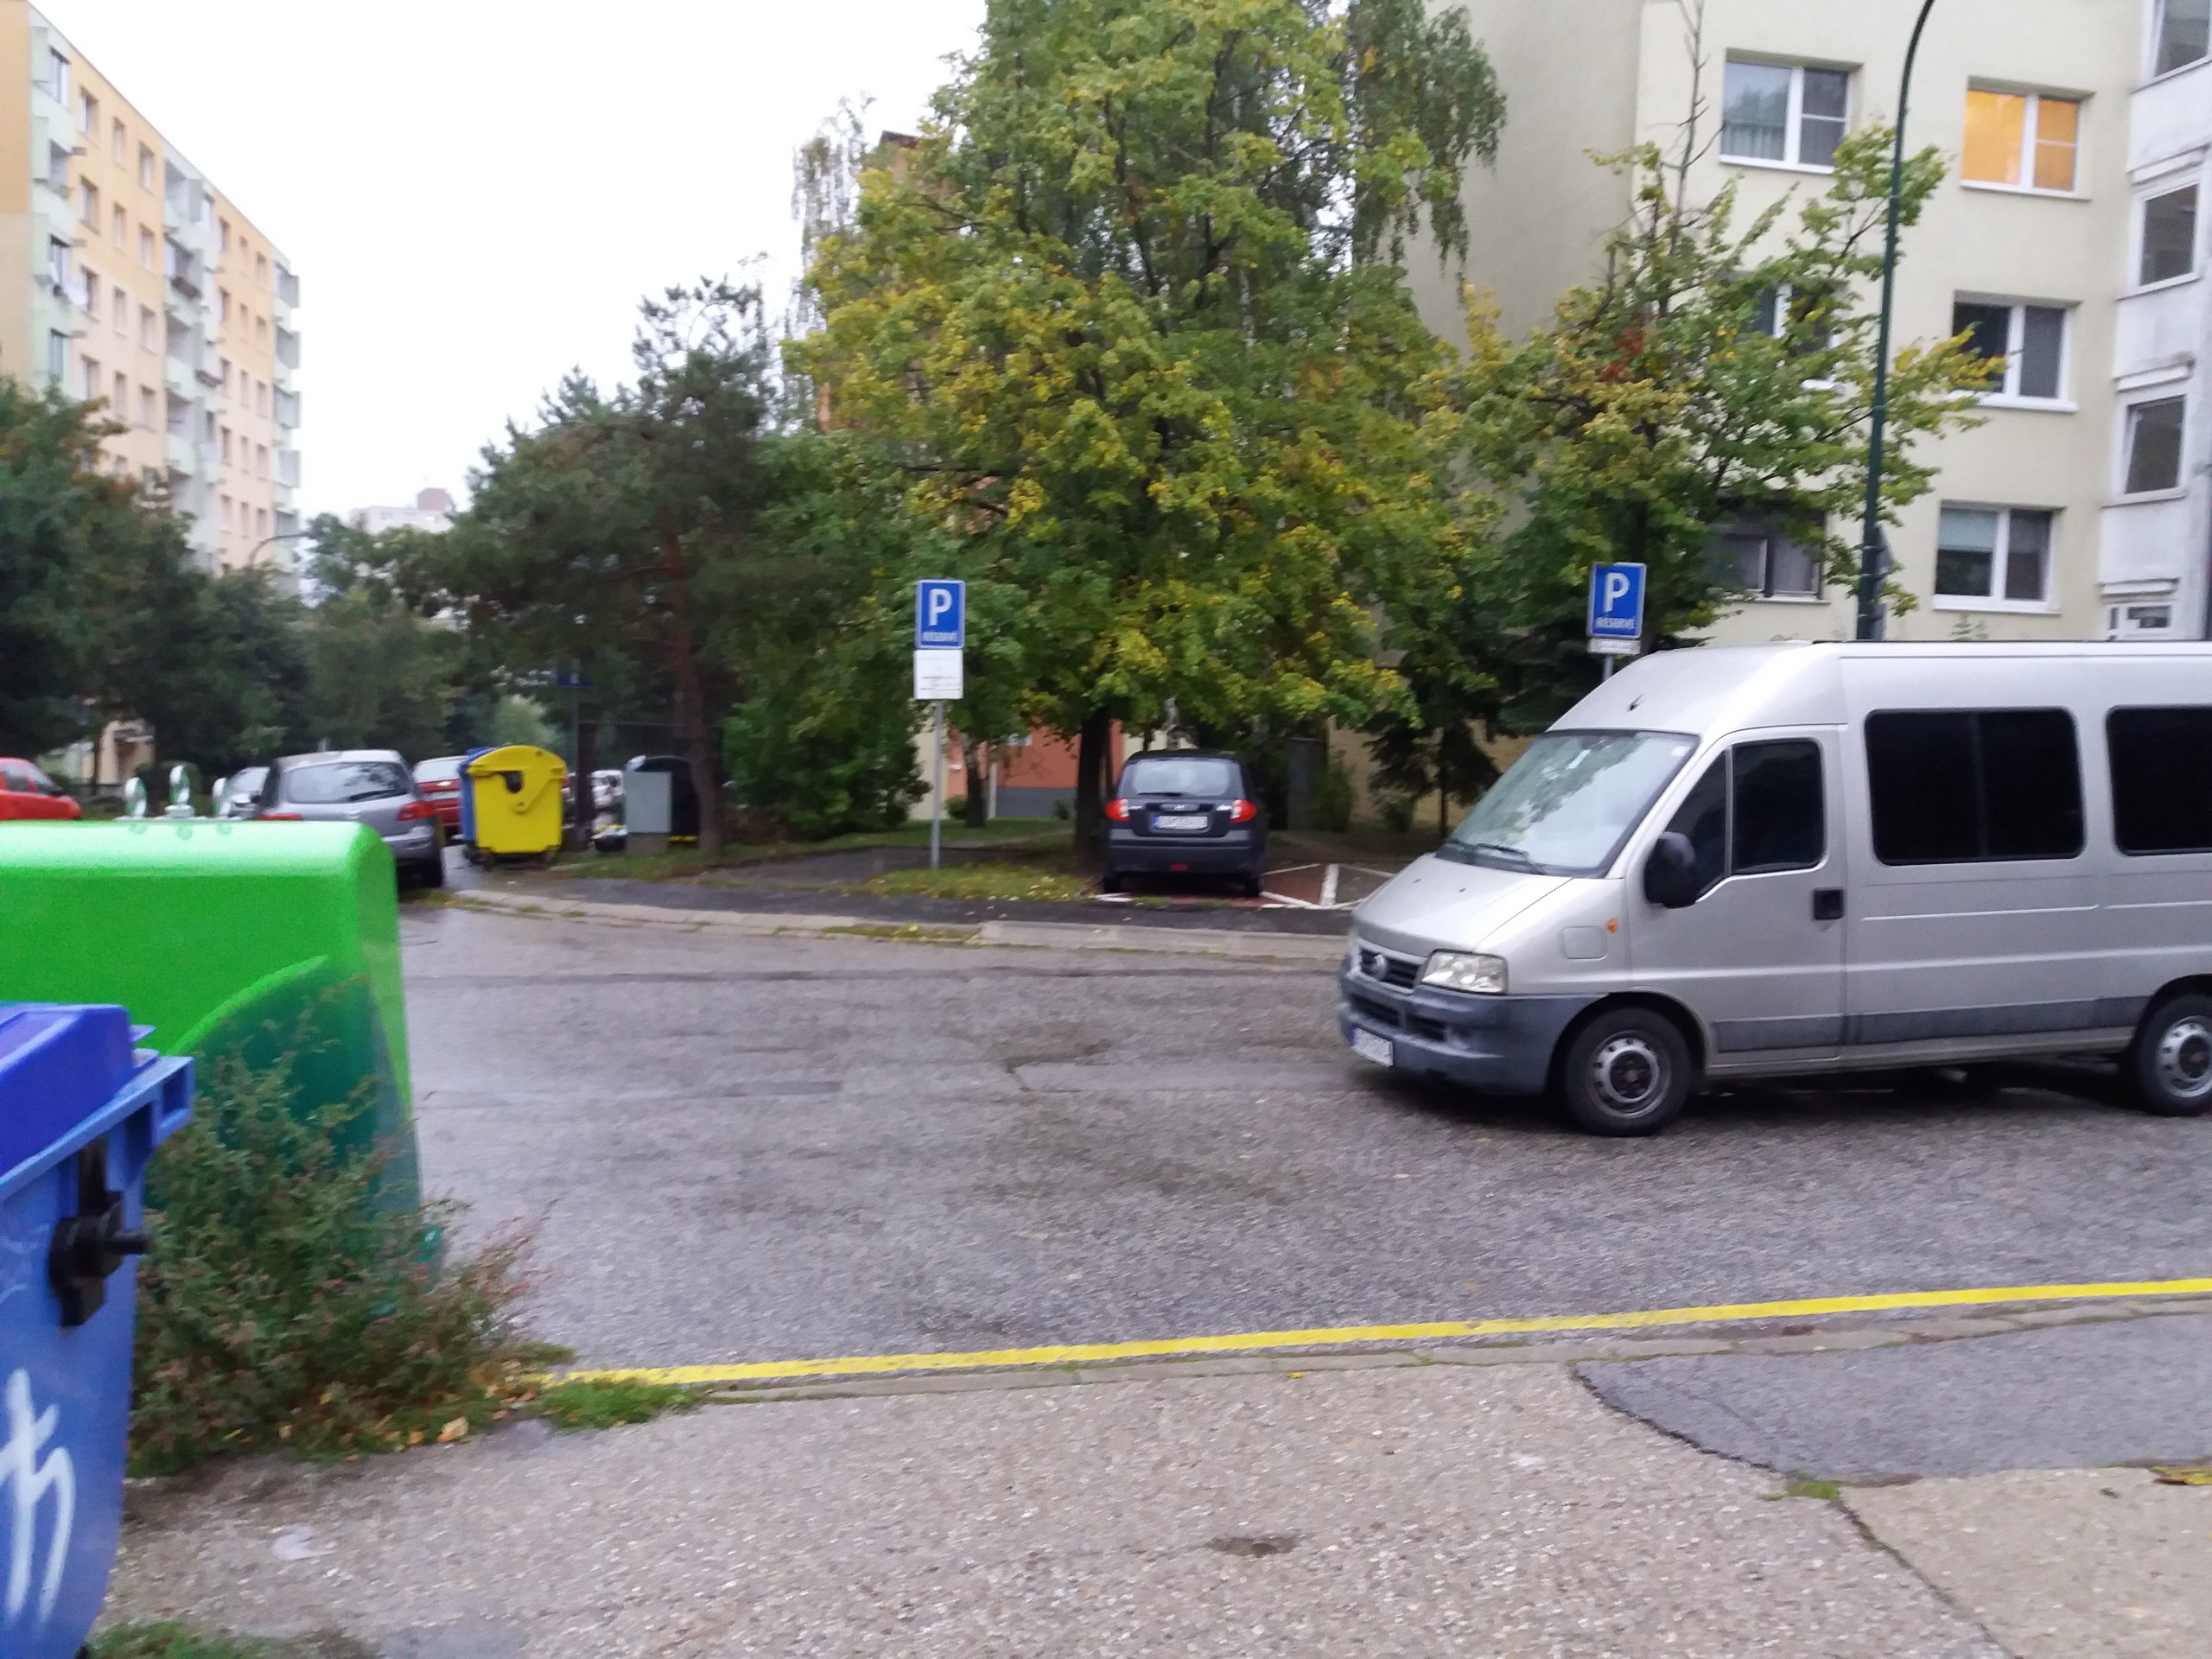 Parkovanie vo výjazde k domom Cabanova 13/EFG., Dúbravka, Bratislava |  Odkazprestarostu.sk